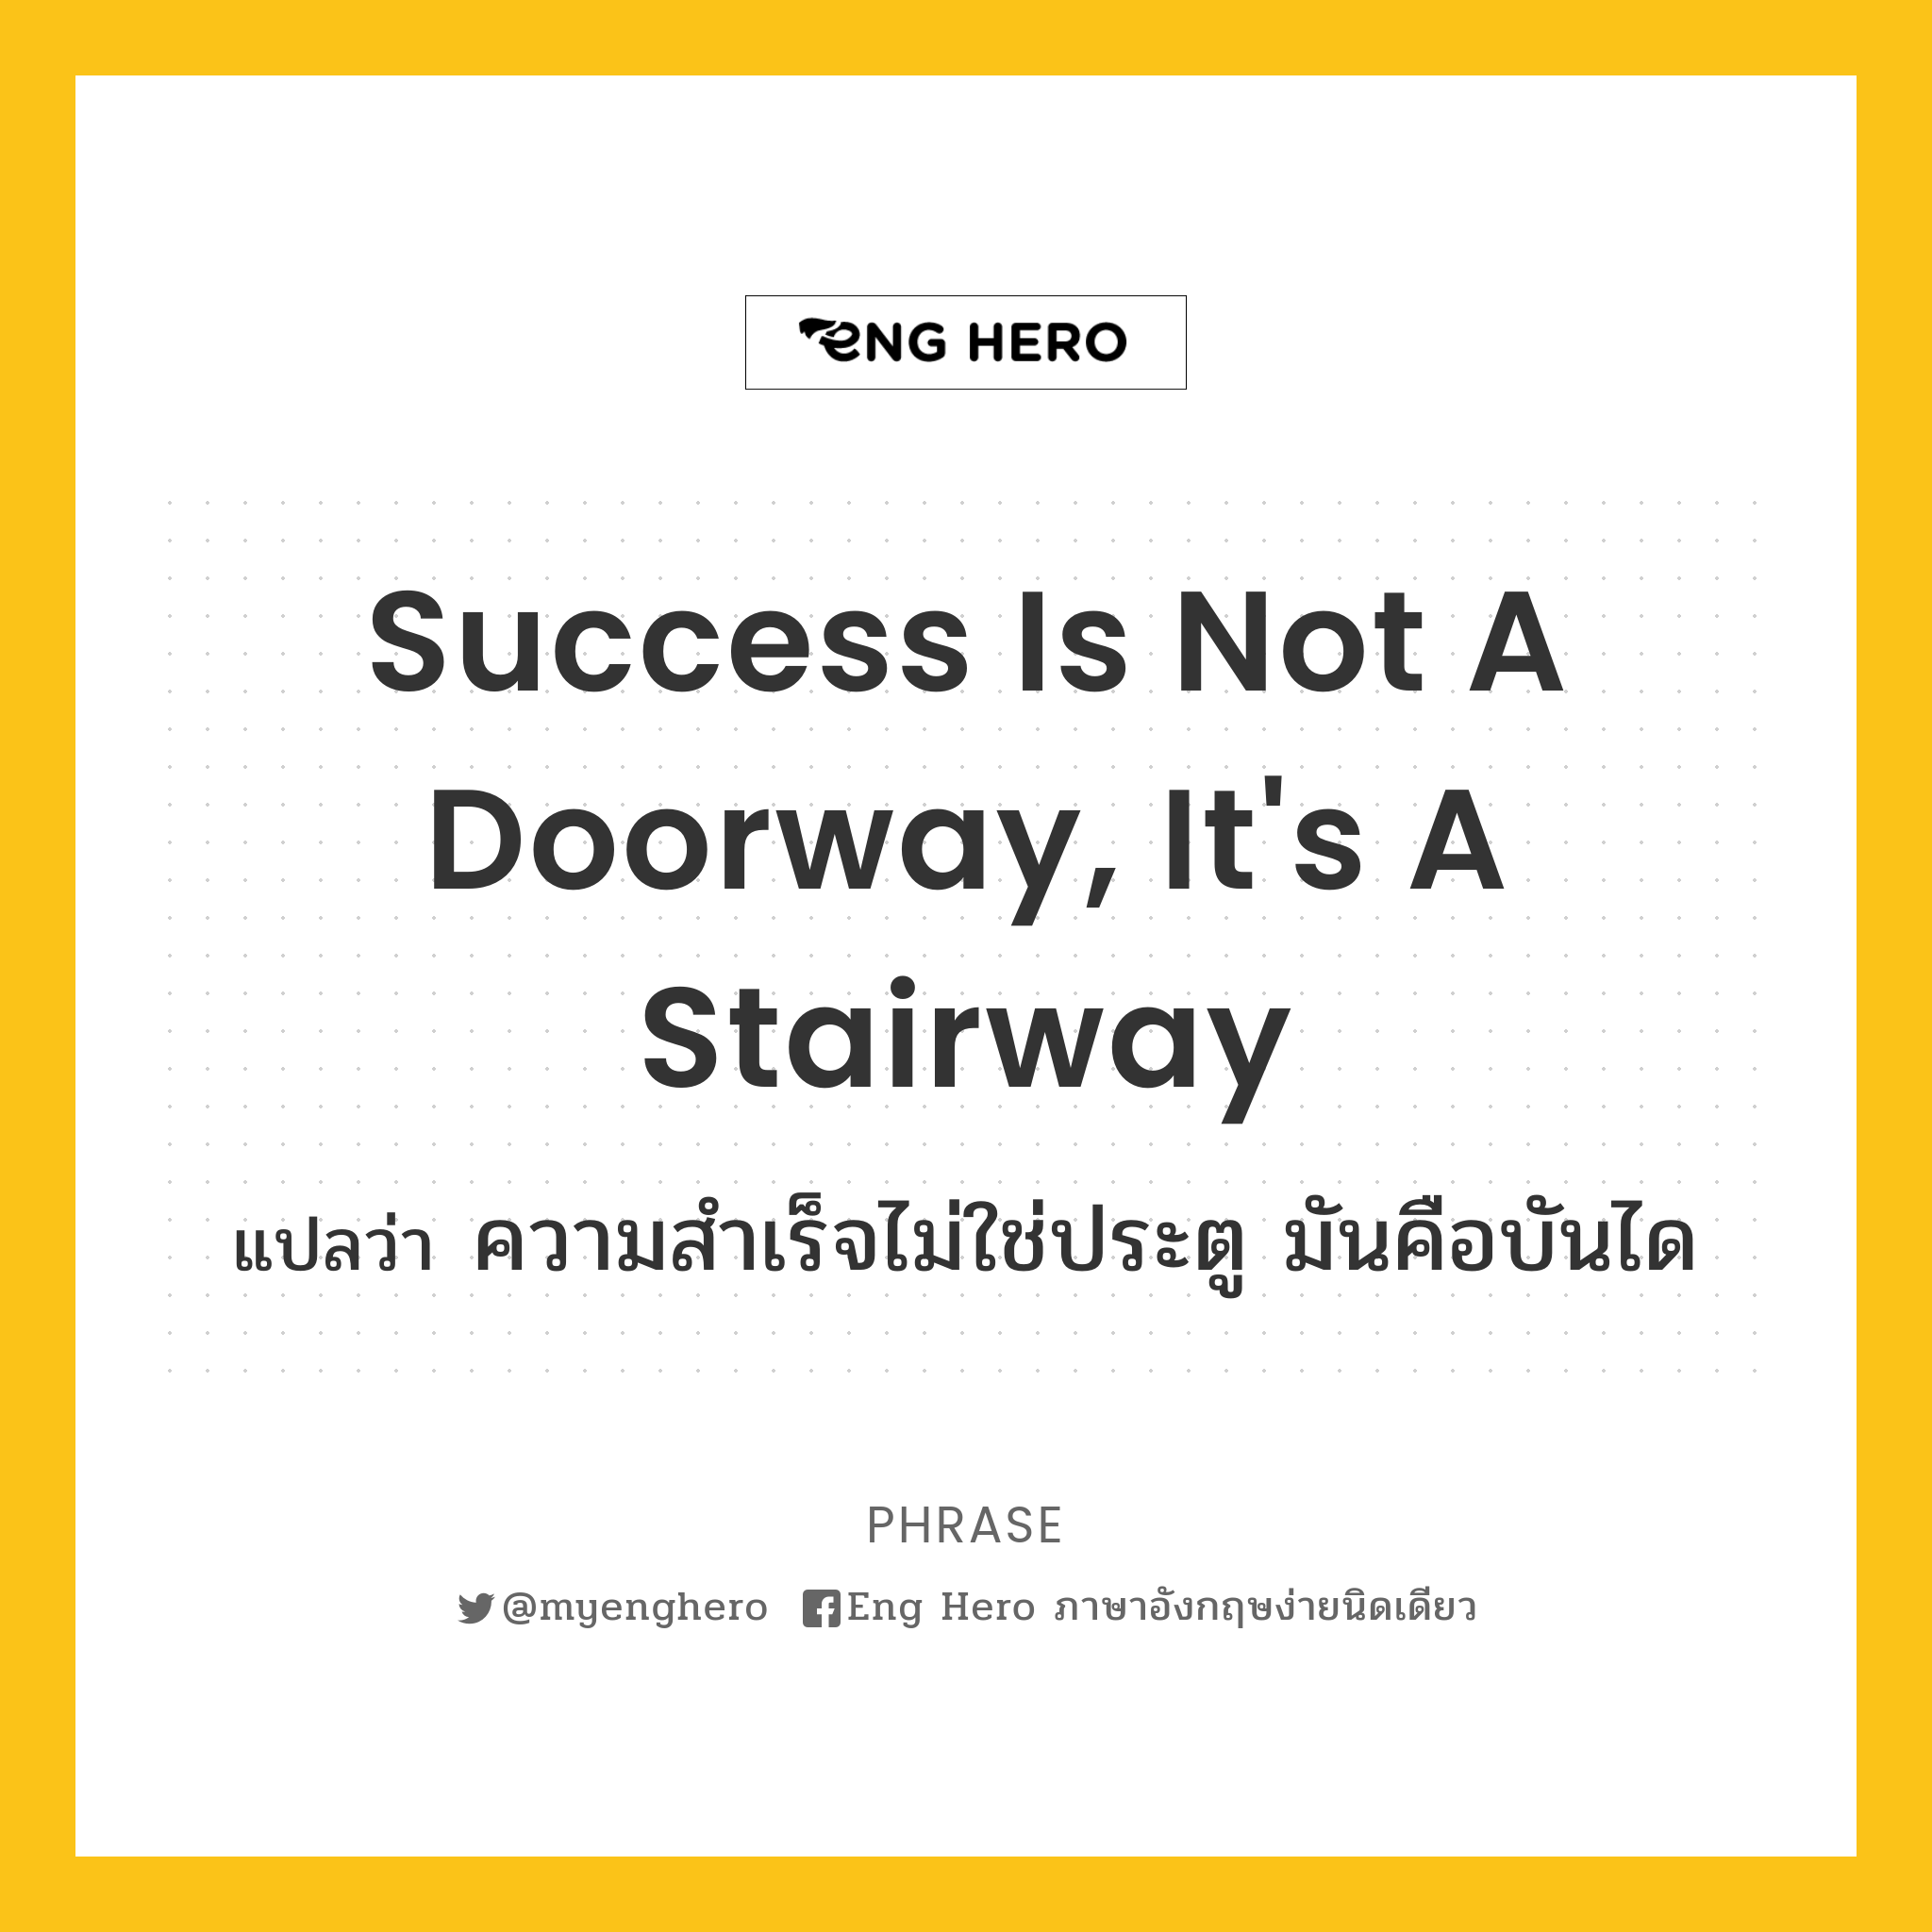 Success is not a doorway, it's a stairway